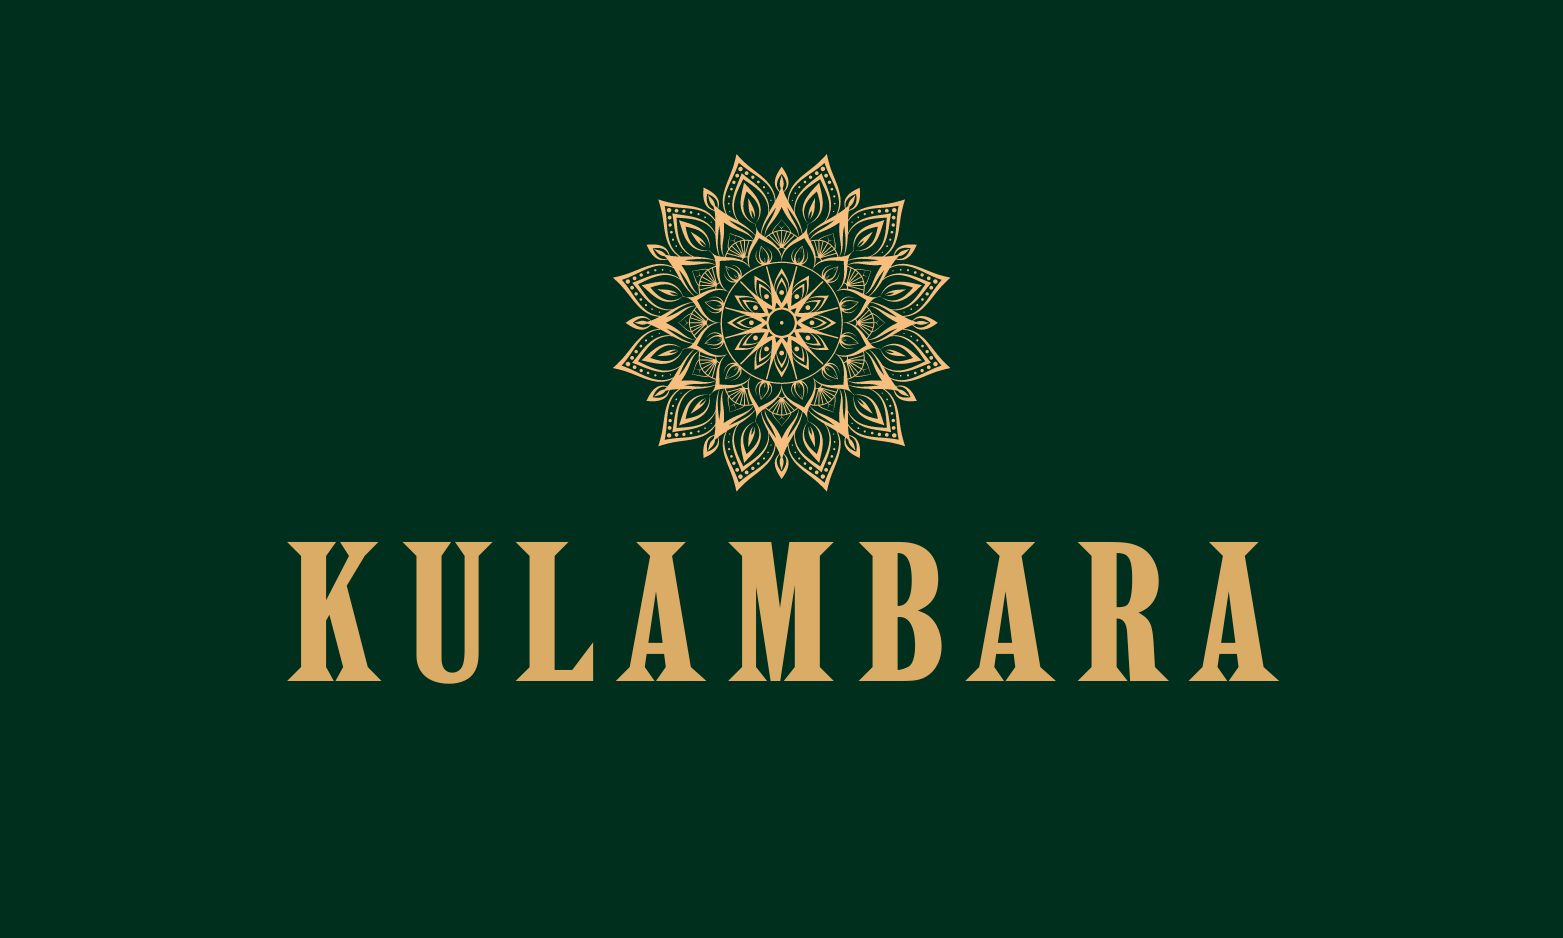 Name for community hall - Kulambara.in is on sale | BrandBrahma